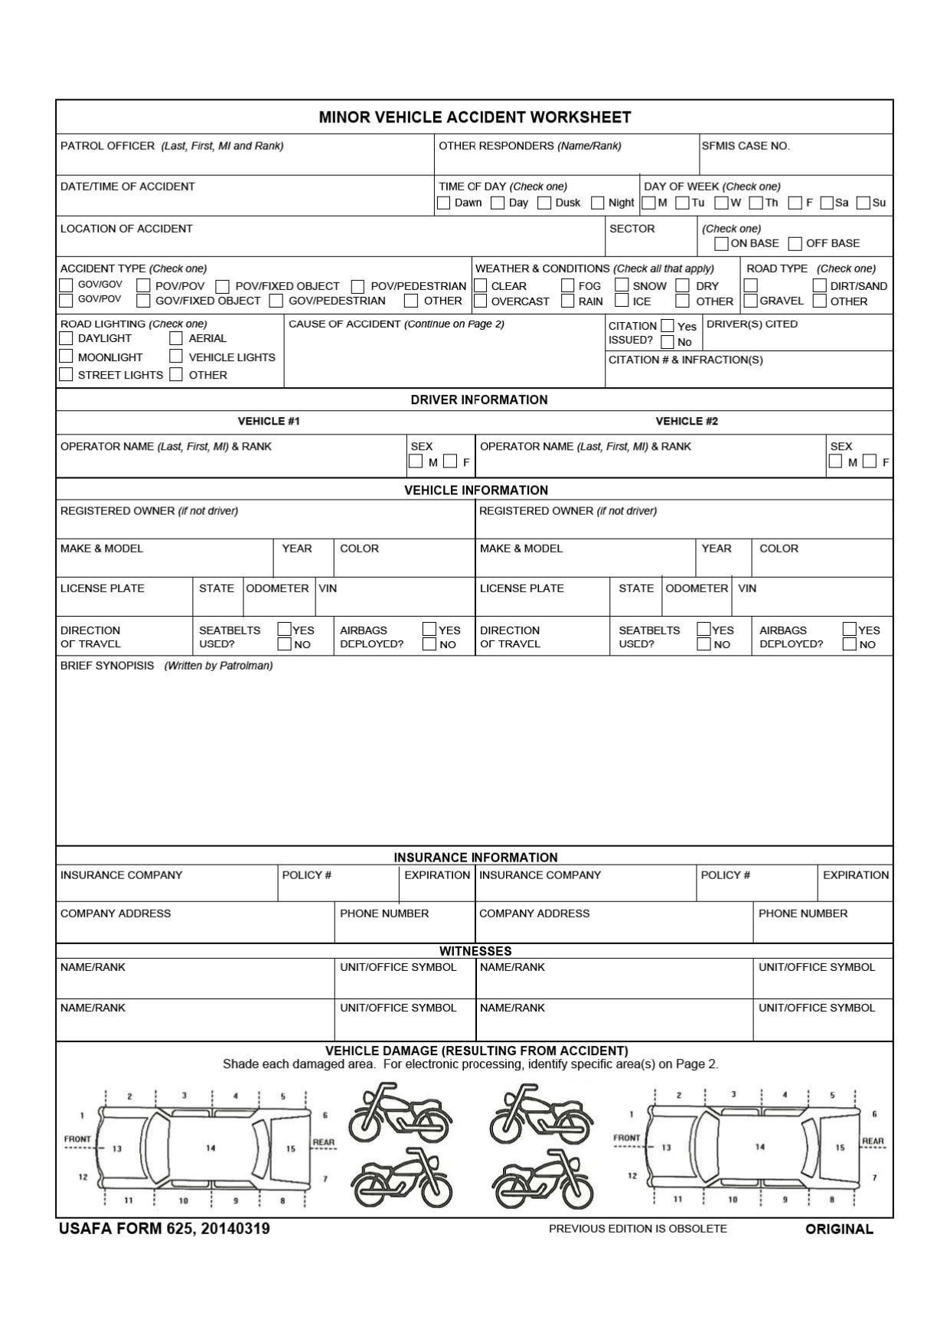 USAFA Form 625 Minor Vehicle Accident Worksheet, Page 1